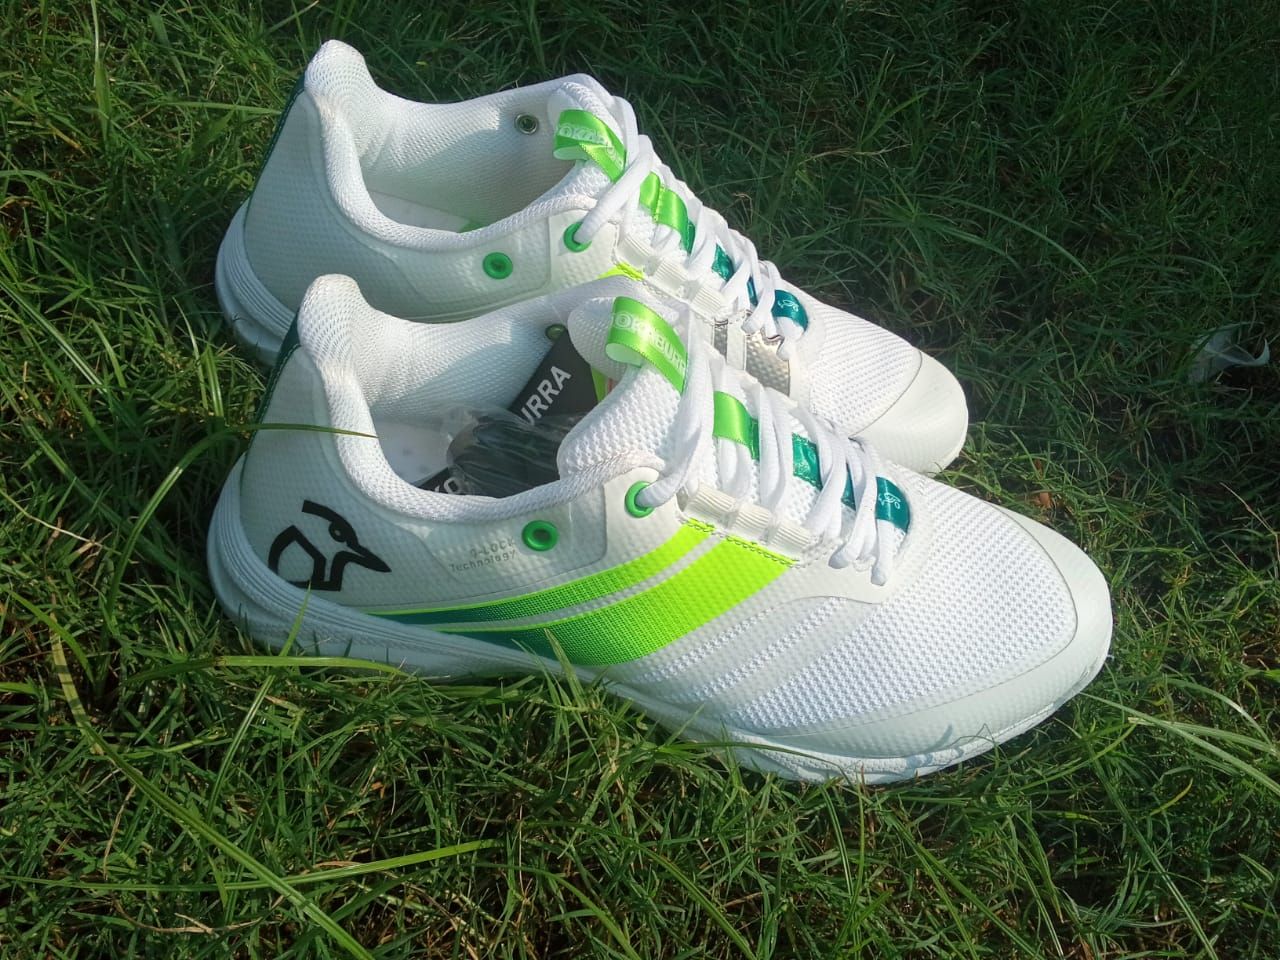 Kookaburra_pro_2.0_Spikes_shoes